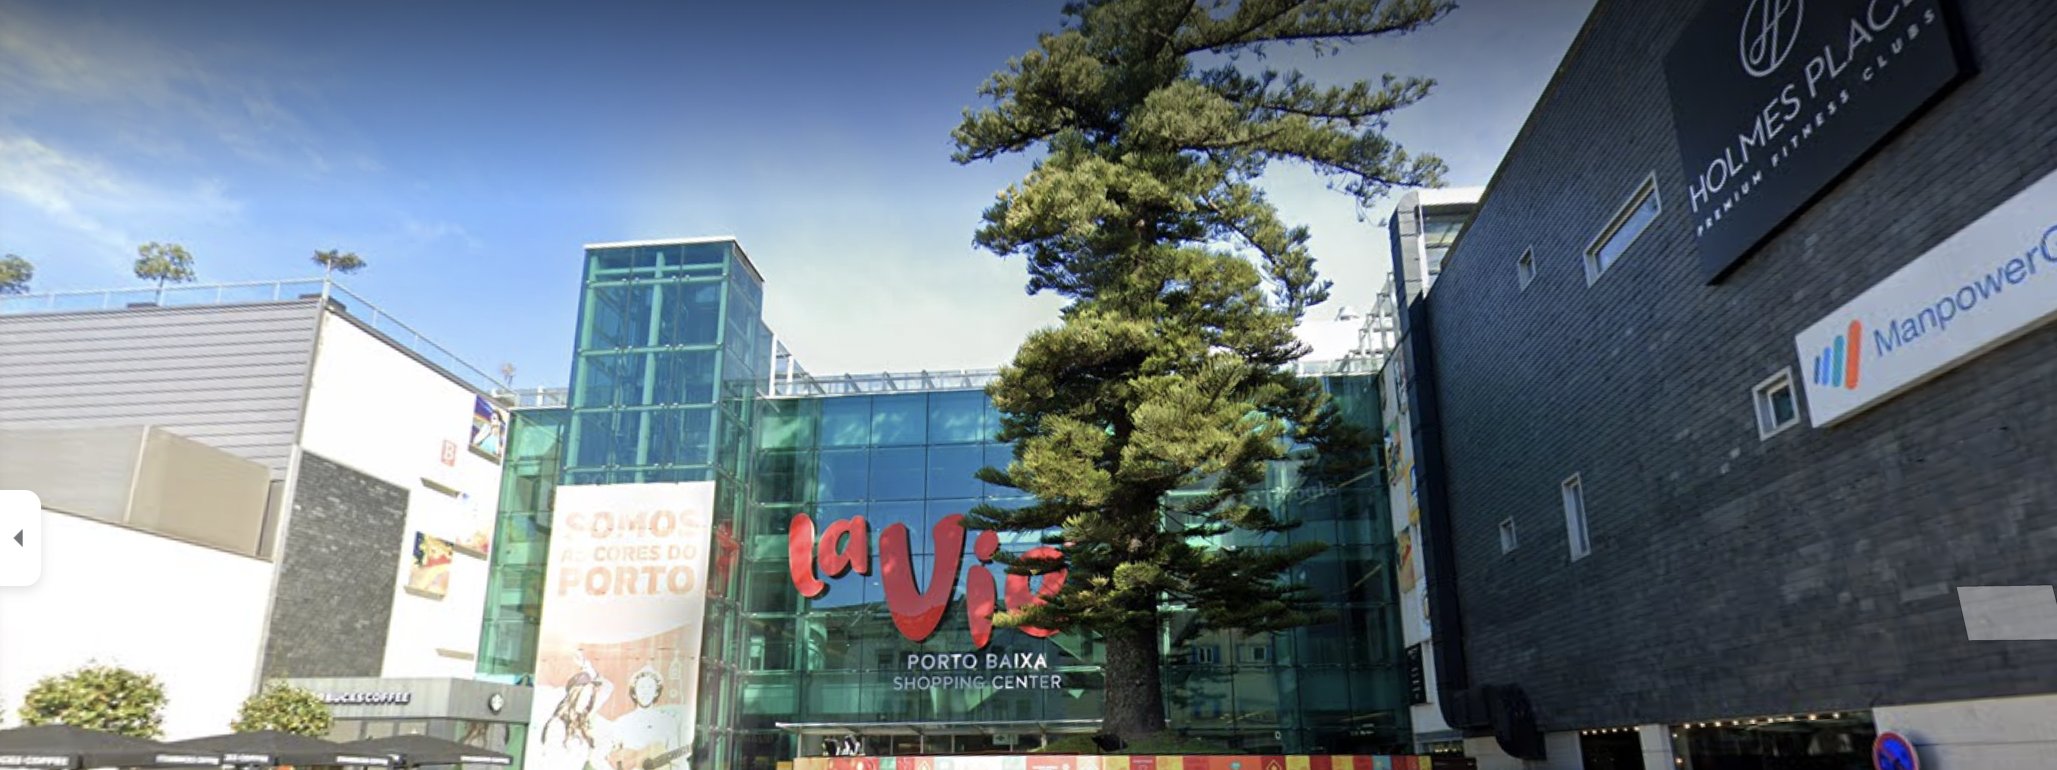 CGD vende Centro comercial La Vie no Porto